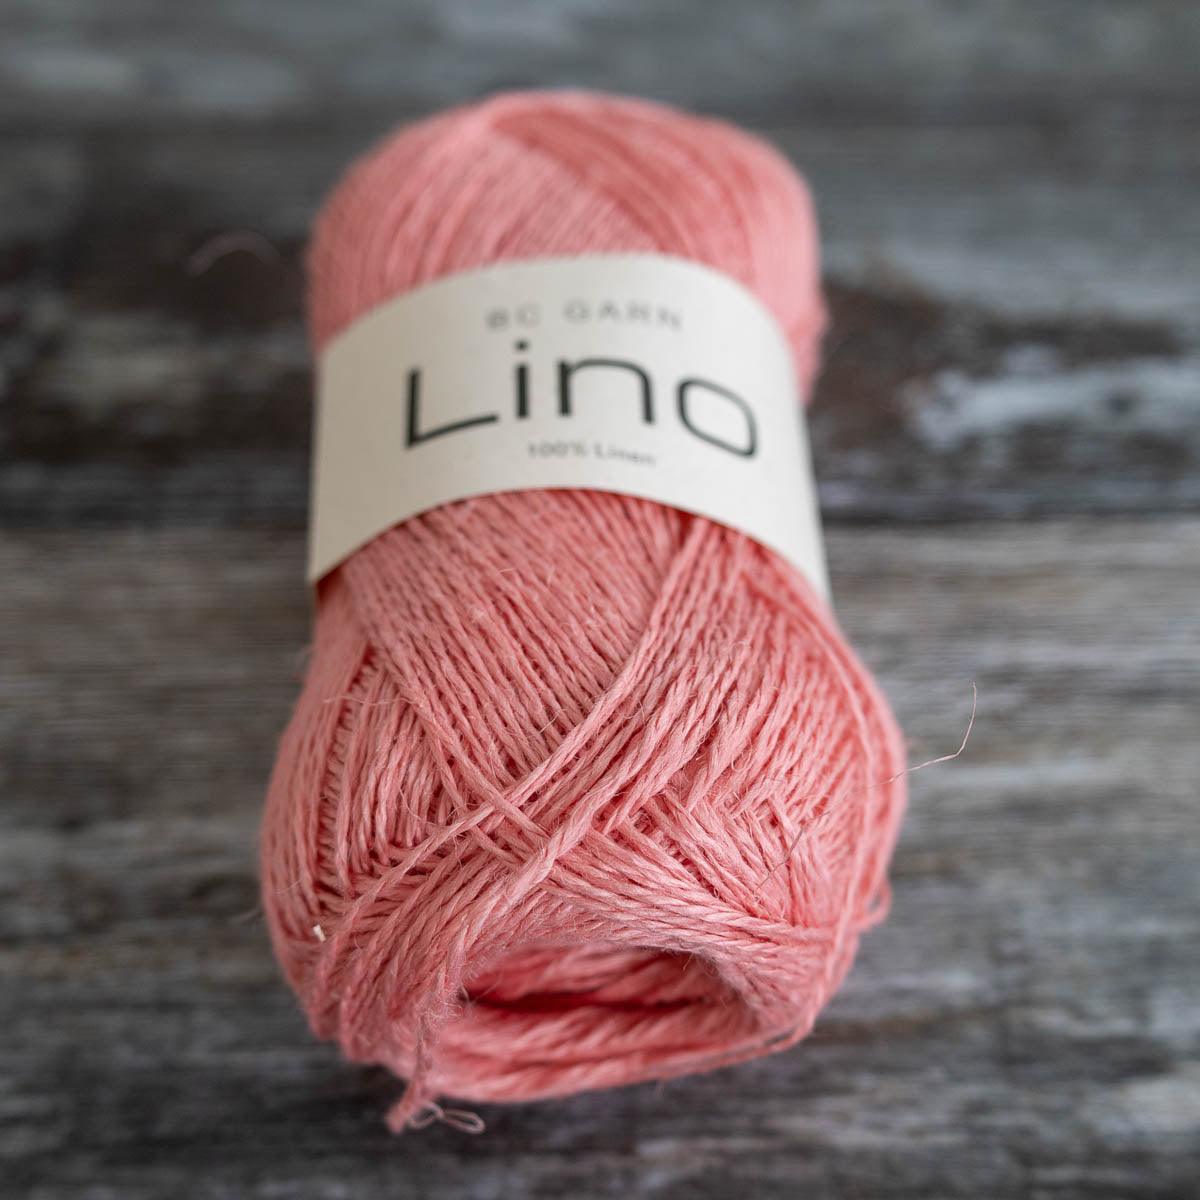 BC Garn BC Garn Lino - Pink (40) - 4ply Knitting Yarn